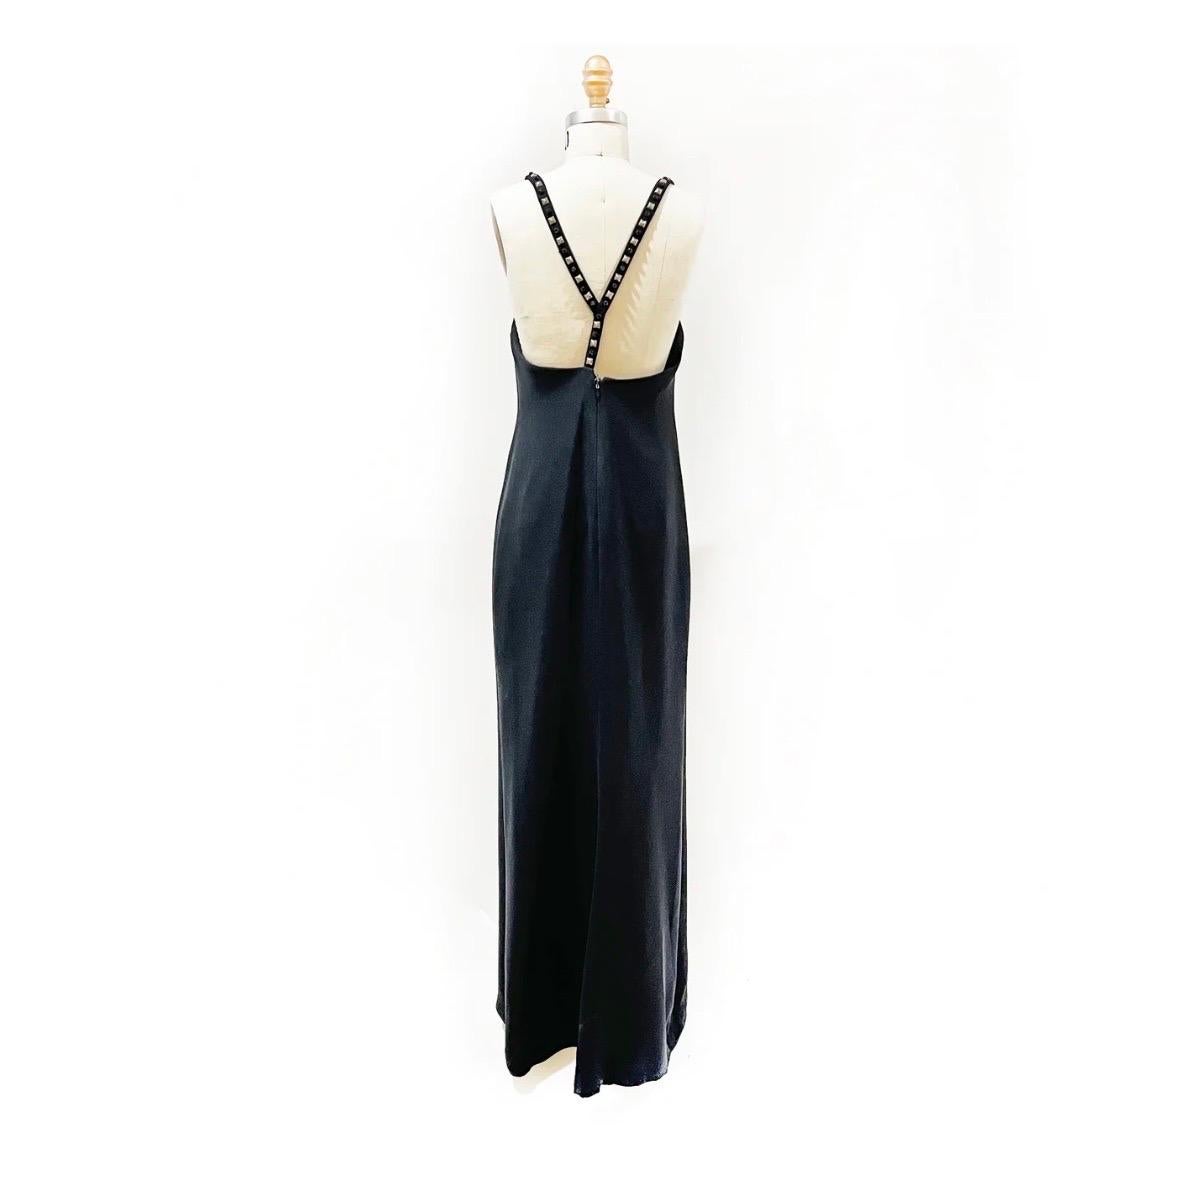 Dresses by Ann Lowe adorn Winterthur - WHYY